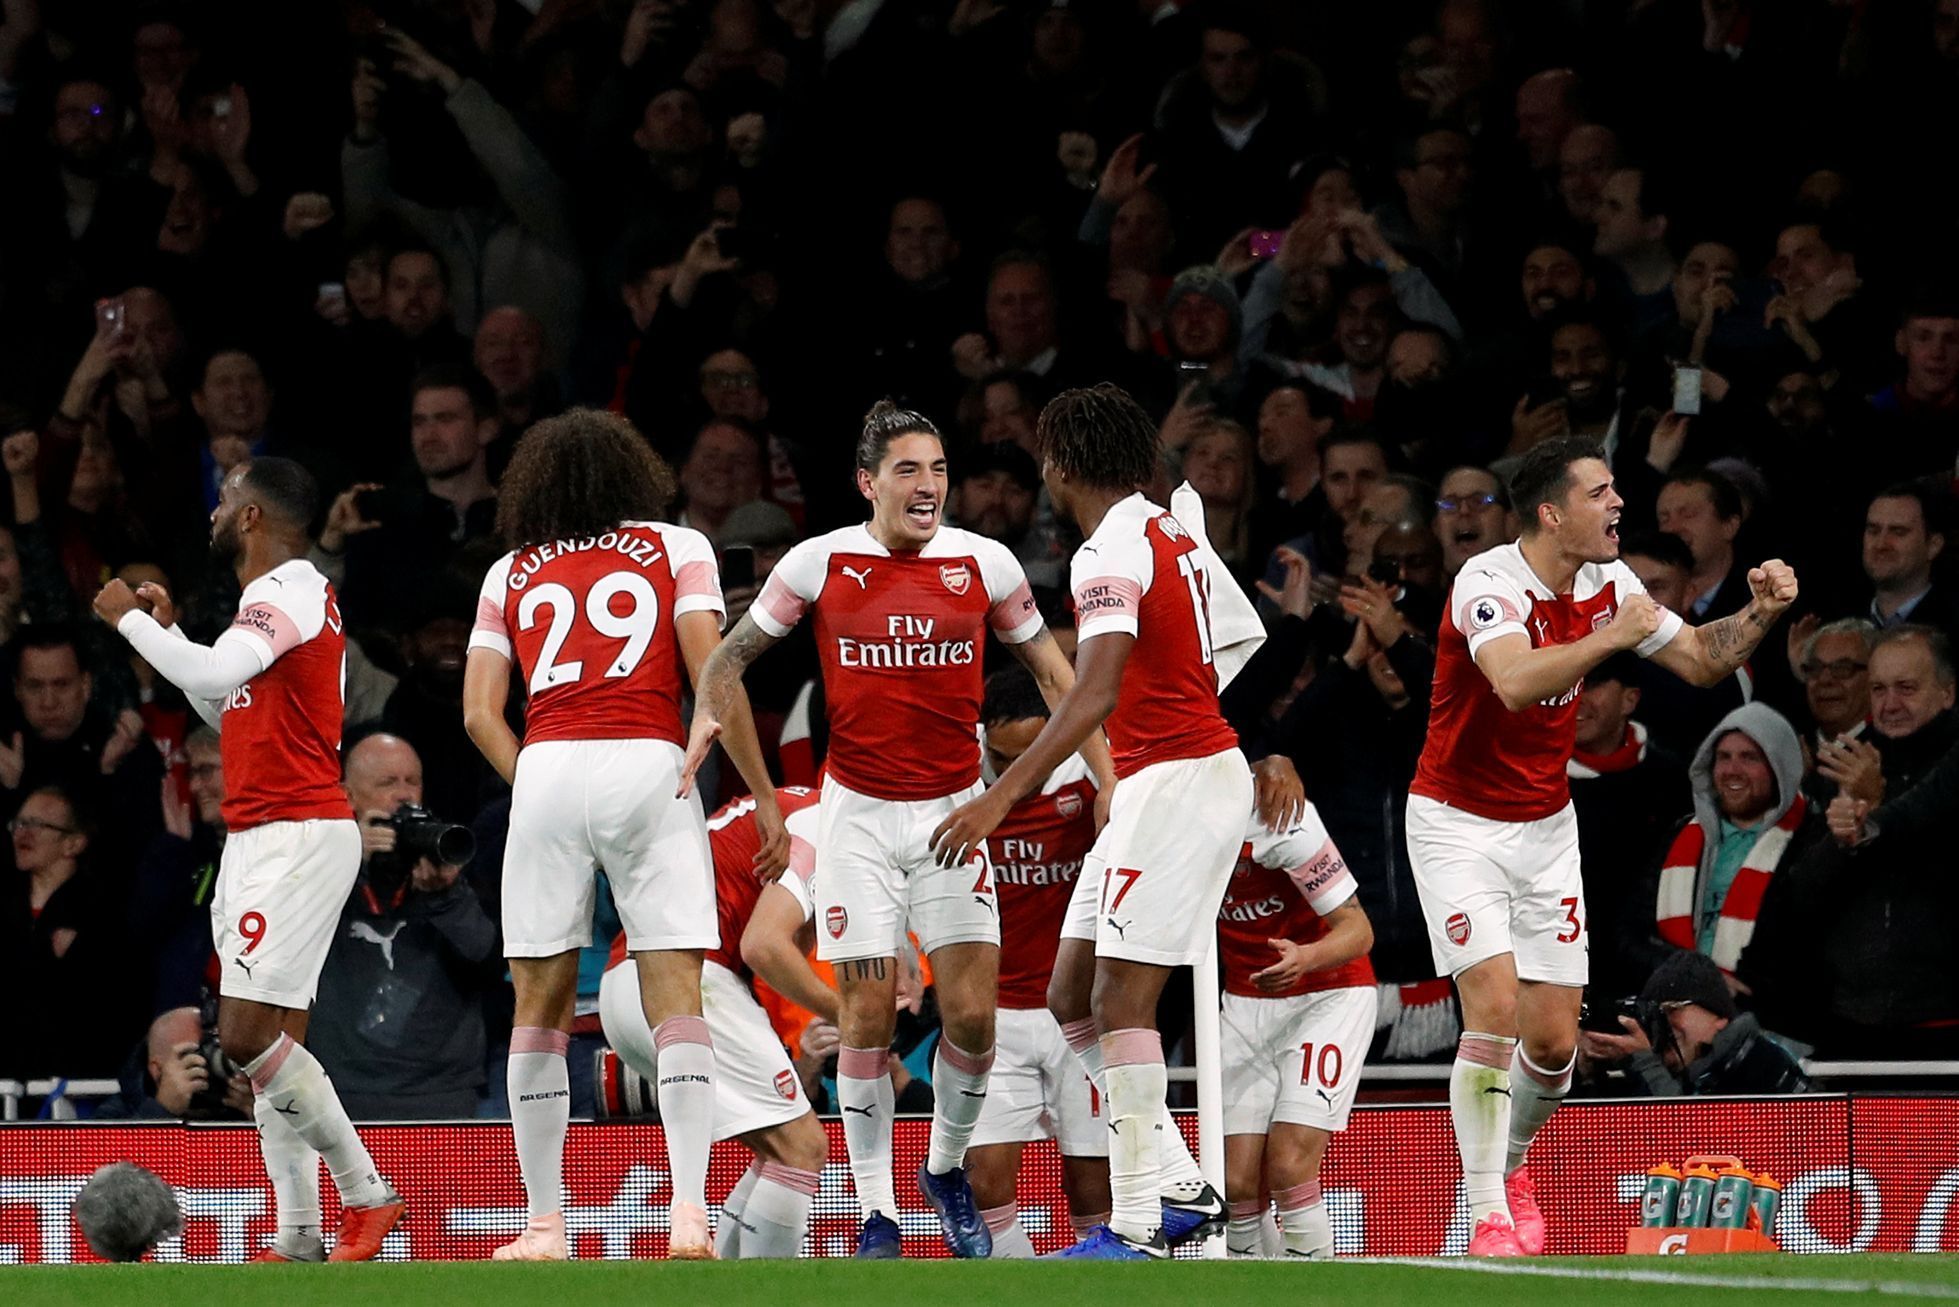 Radost fotbalistů Arsenalu